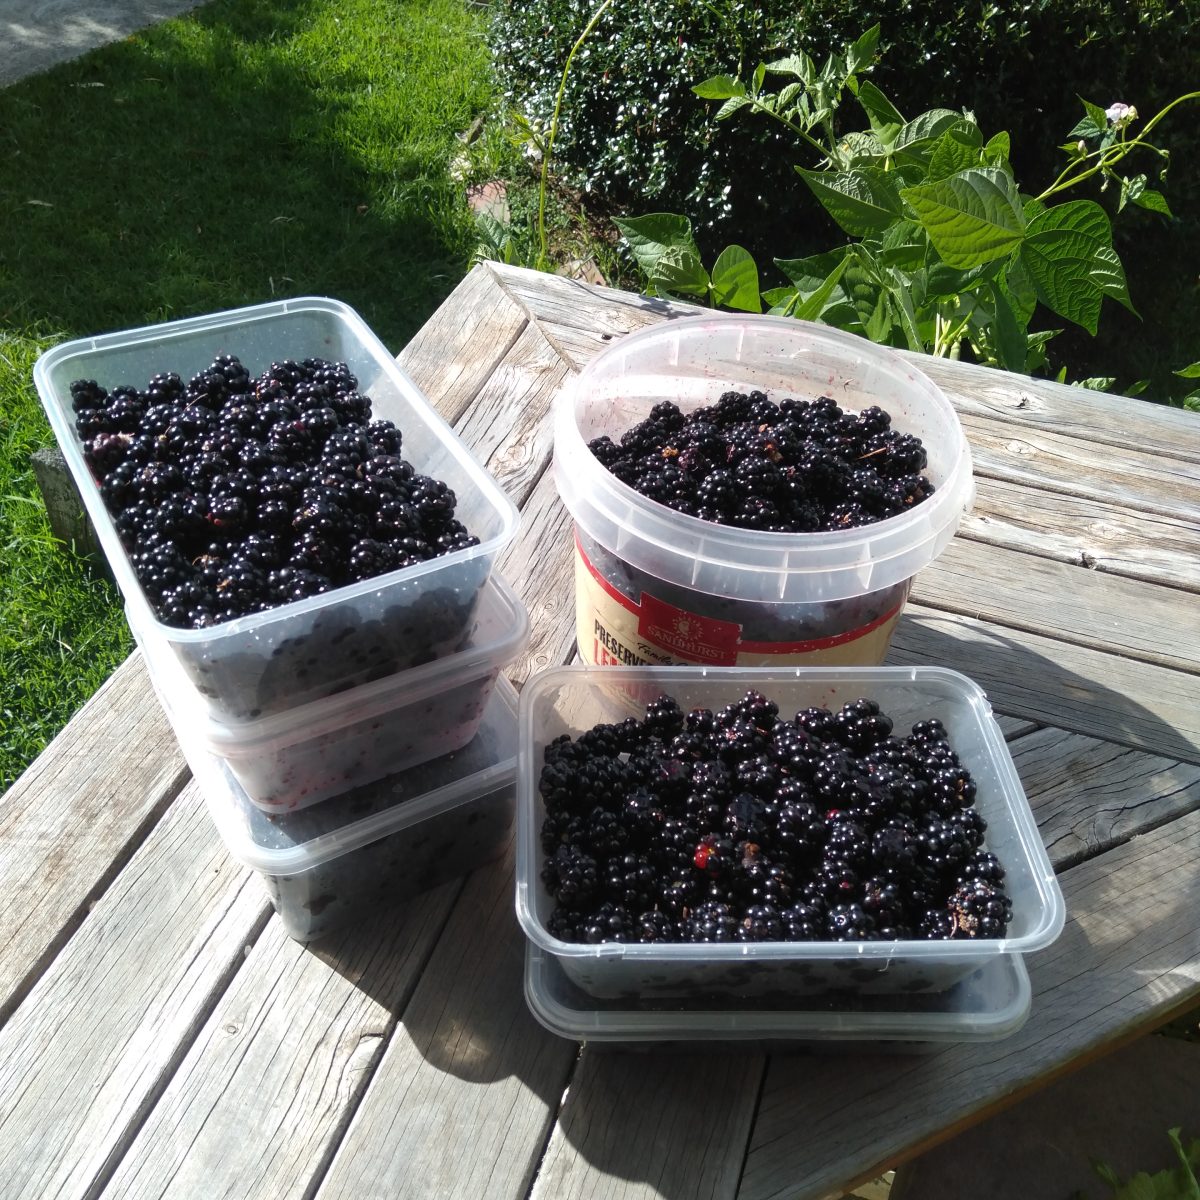 Takeaway containers of blackberries.